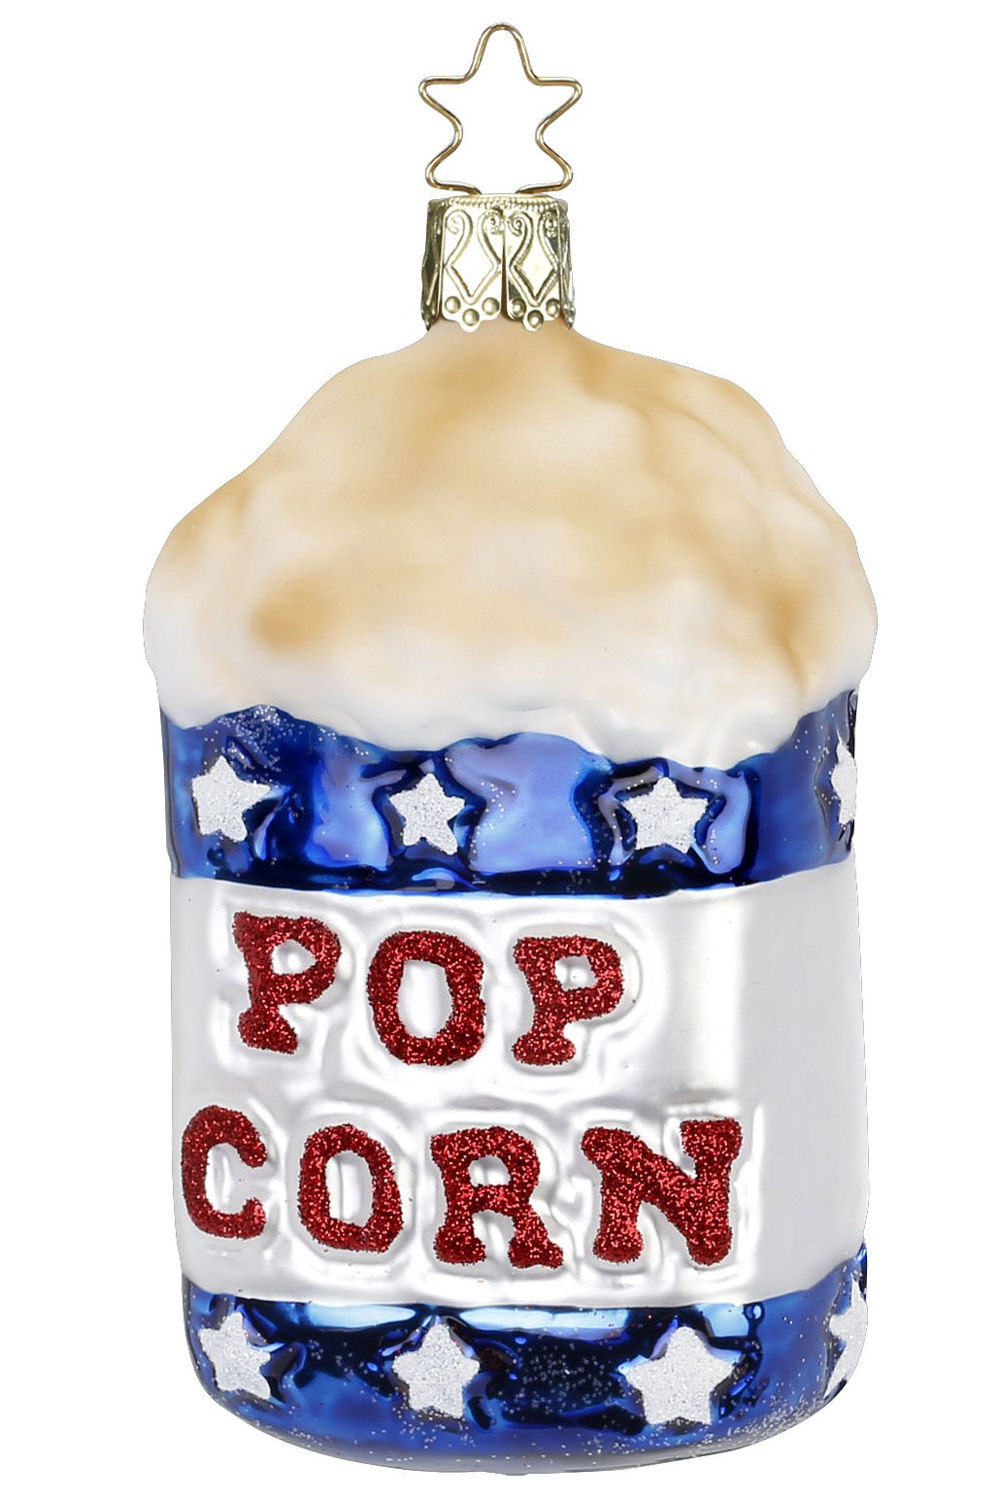 Patriotic Pop Corn, Red White Blue